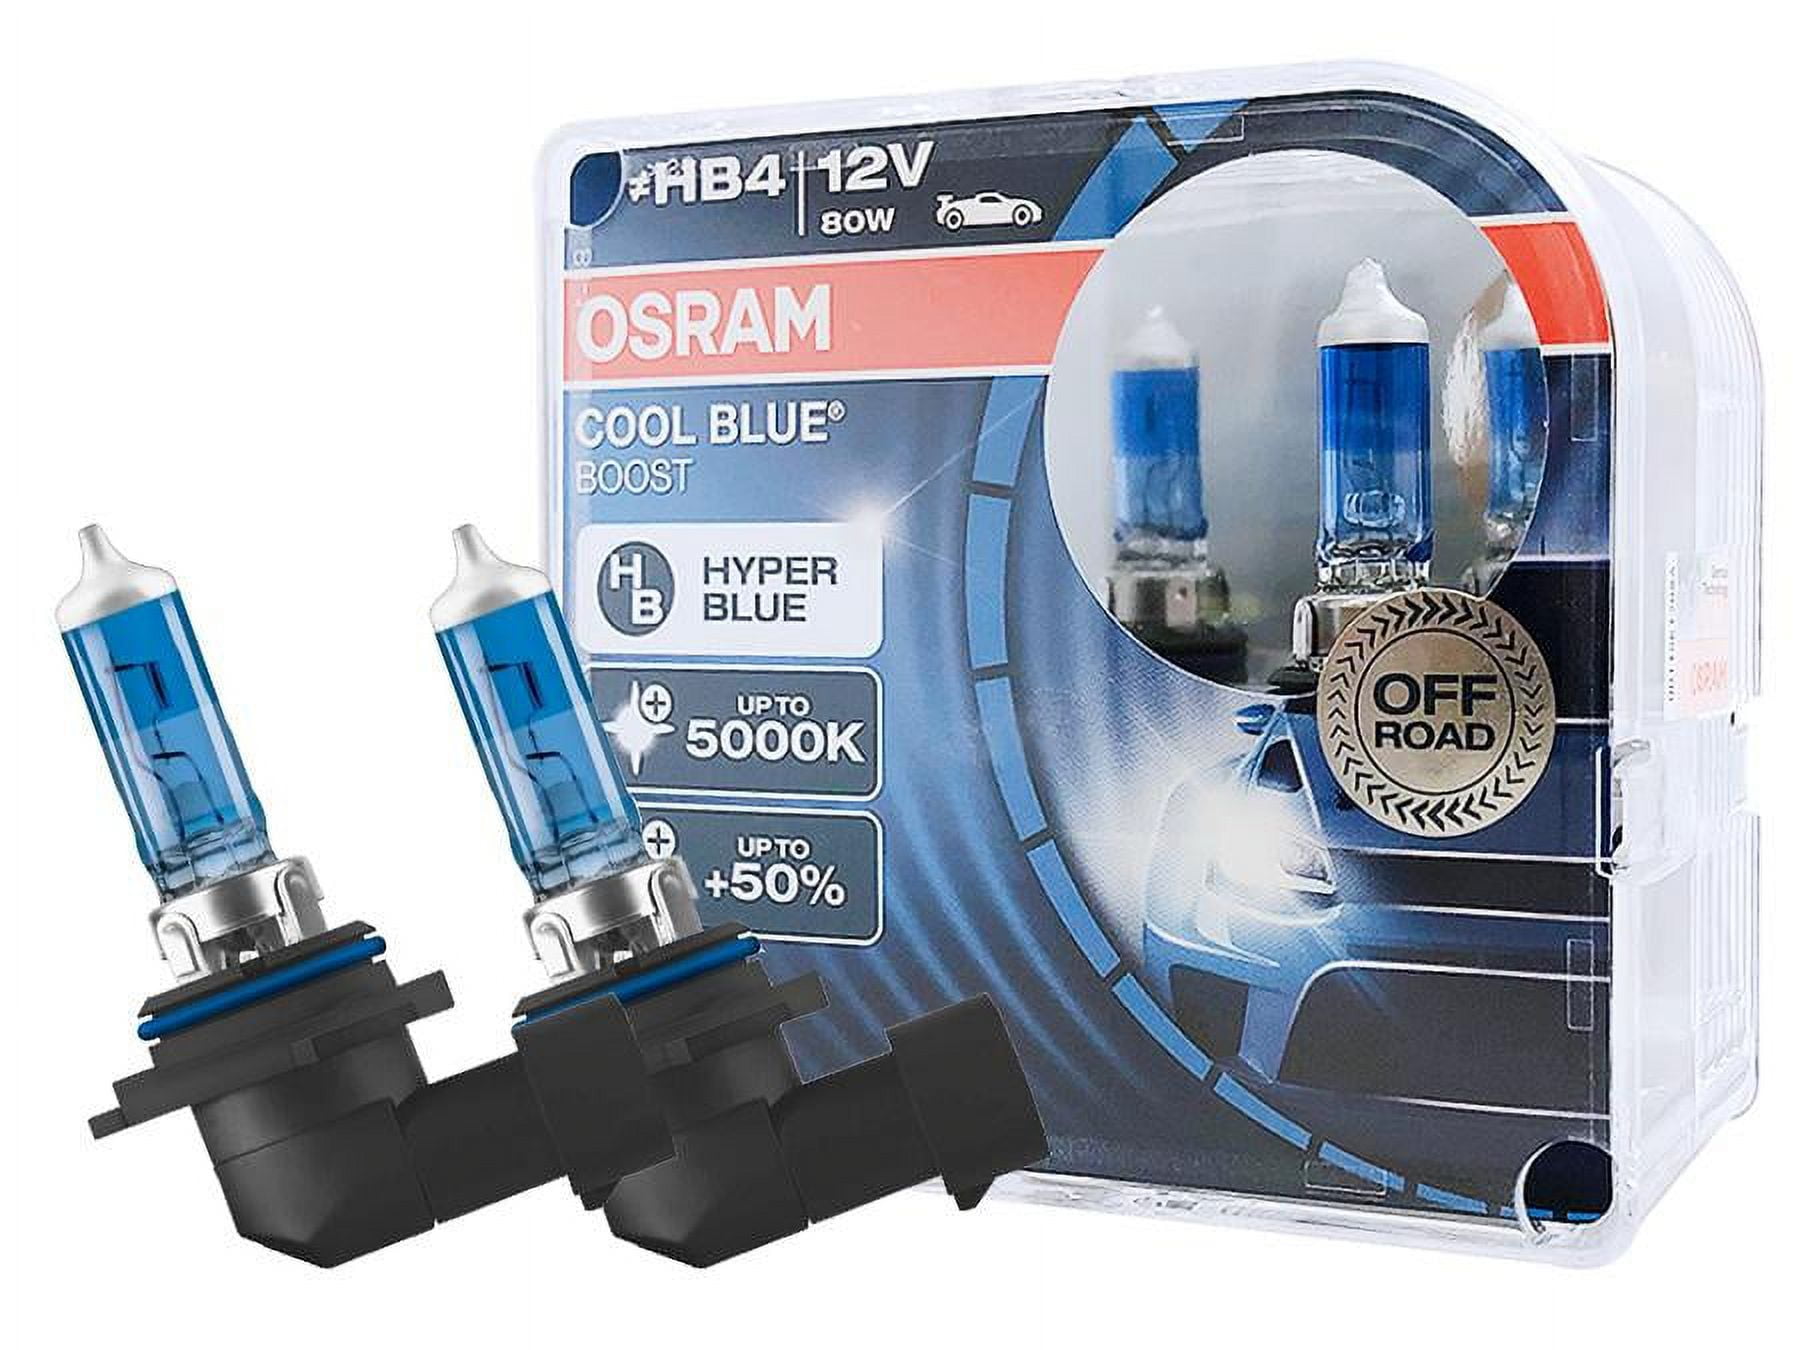 HB4 (9006) Osram Up to 5000K Cool Blue Boost Halogen Headlight